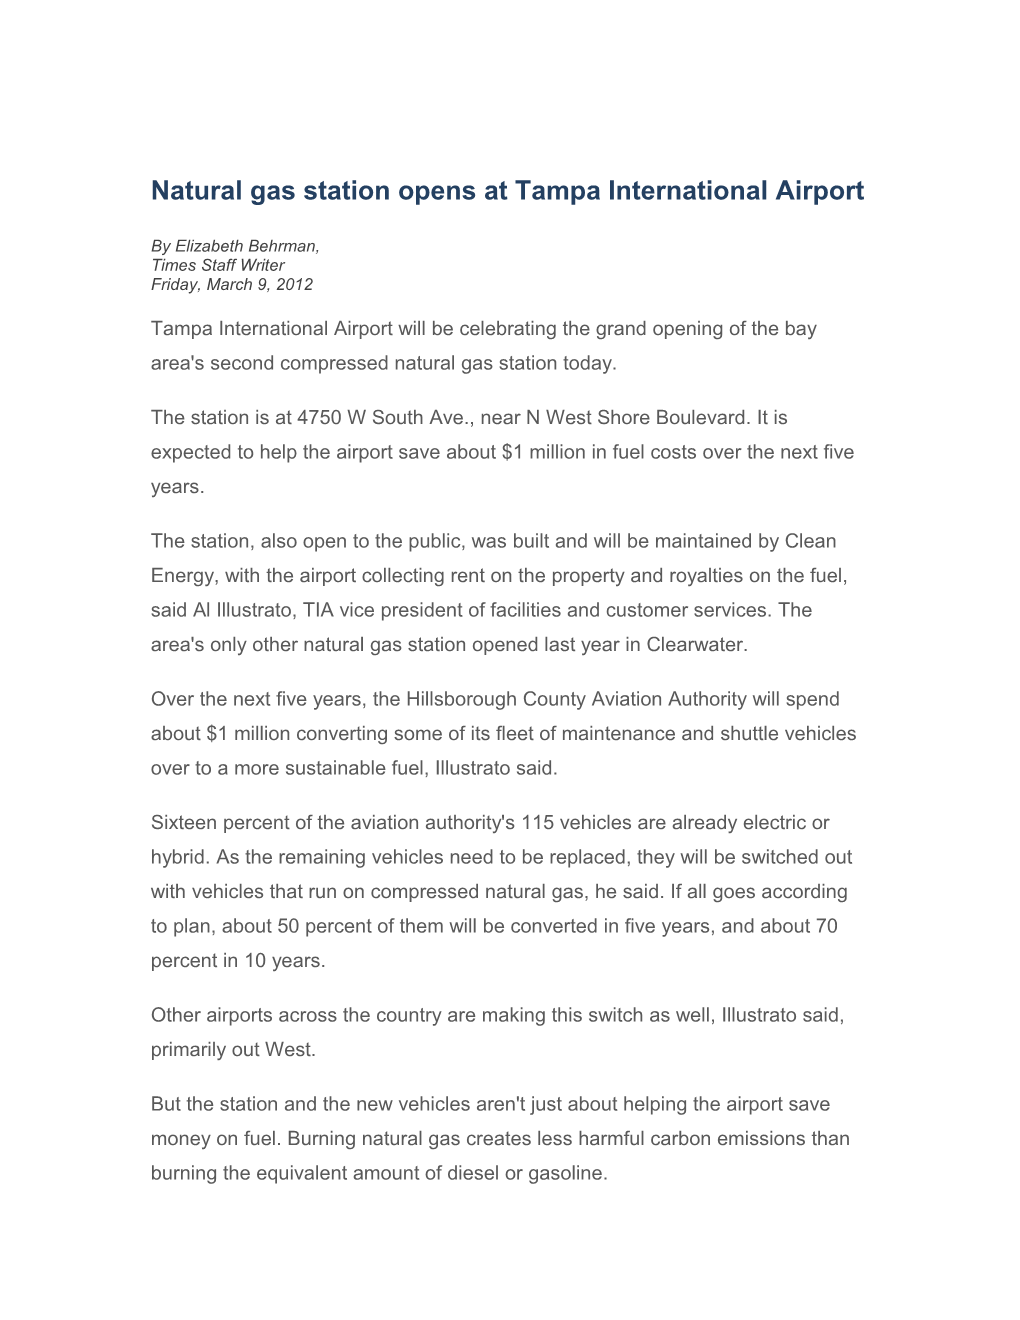 Natural Gas Station Opens at Tampa International Airport